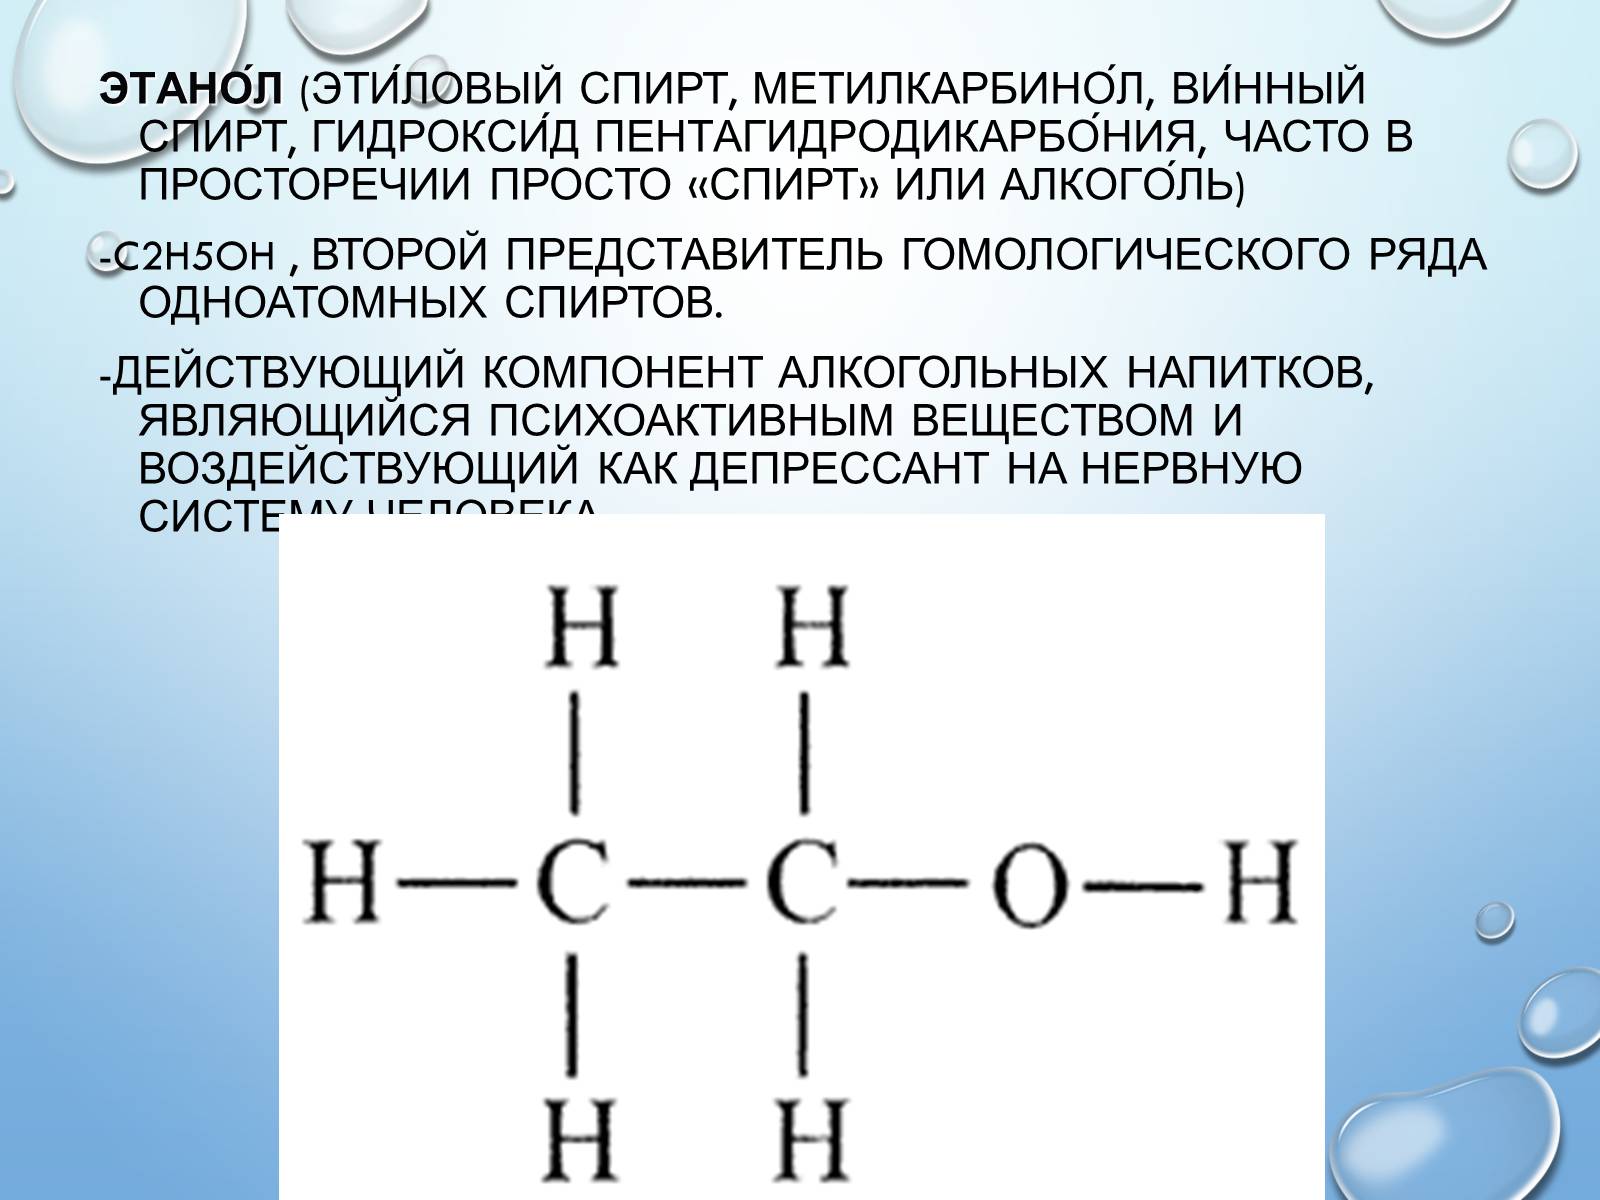 C2h5oh этиловый. Этанол структурная формула.